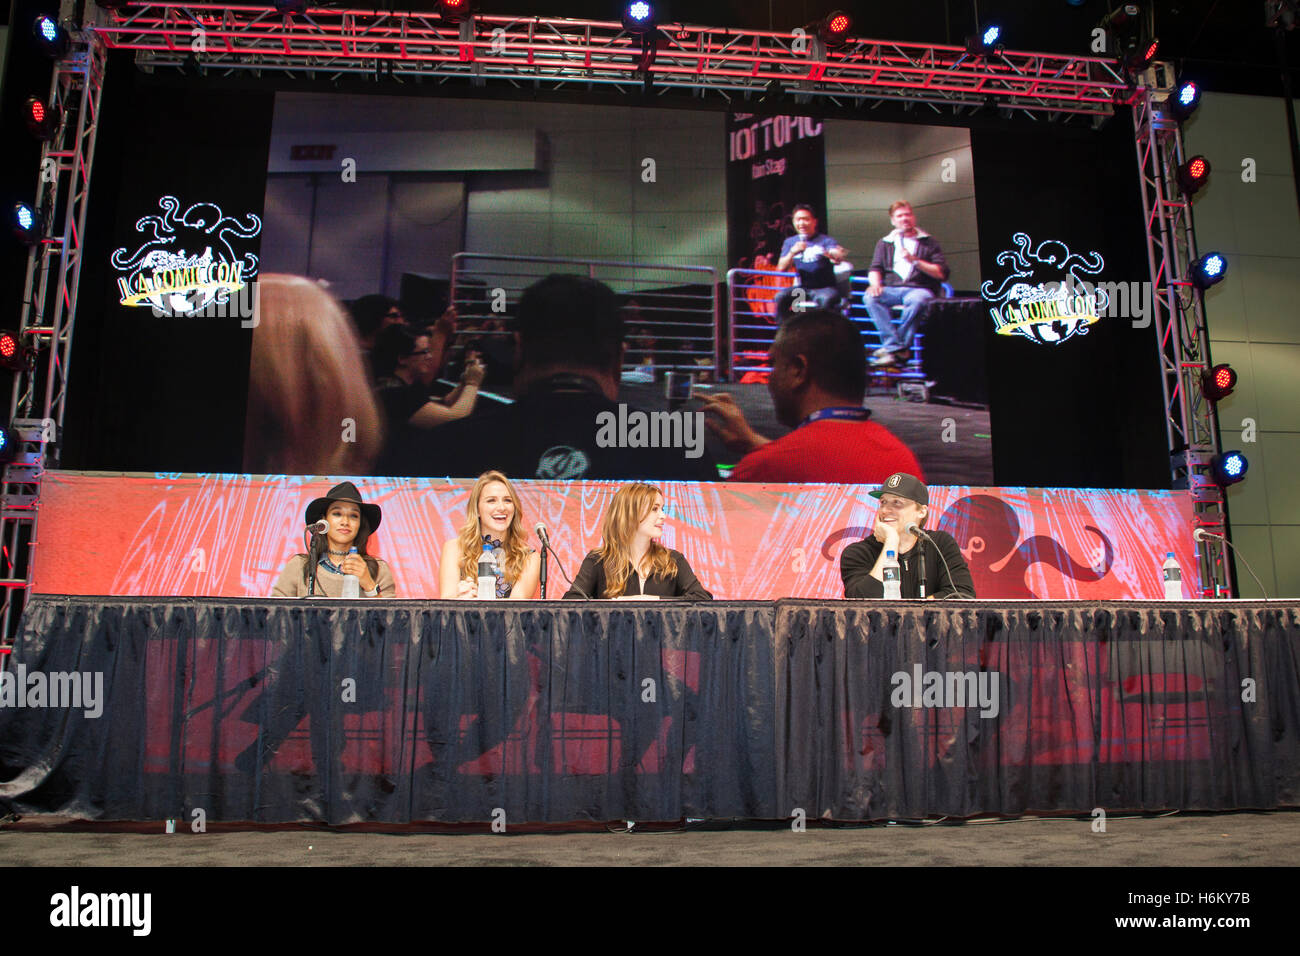 STAN LEE LA COMIC CON: Die Besetzung von CW-TV-show The Flash. Candice Patton, Danielle Panabaker, Teddy Sears, Liam McIntyre. Stockfoto